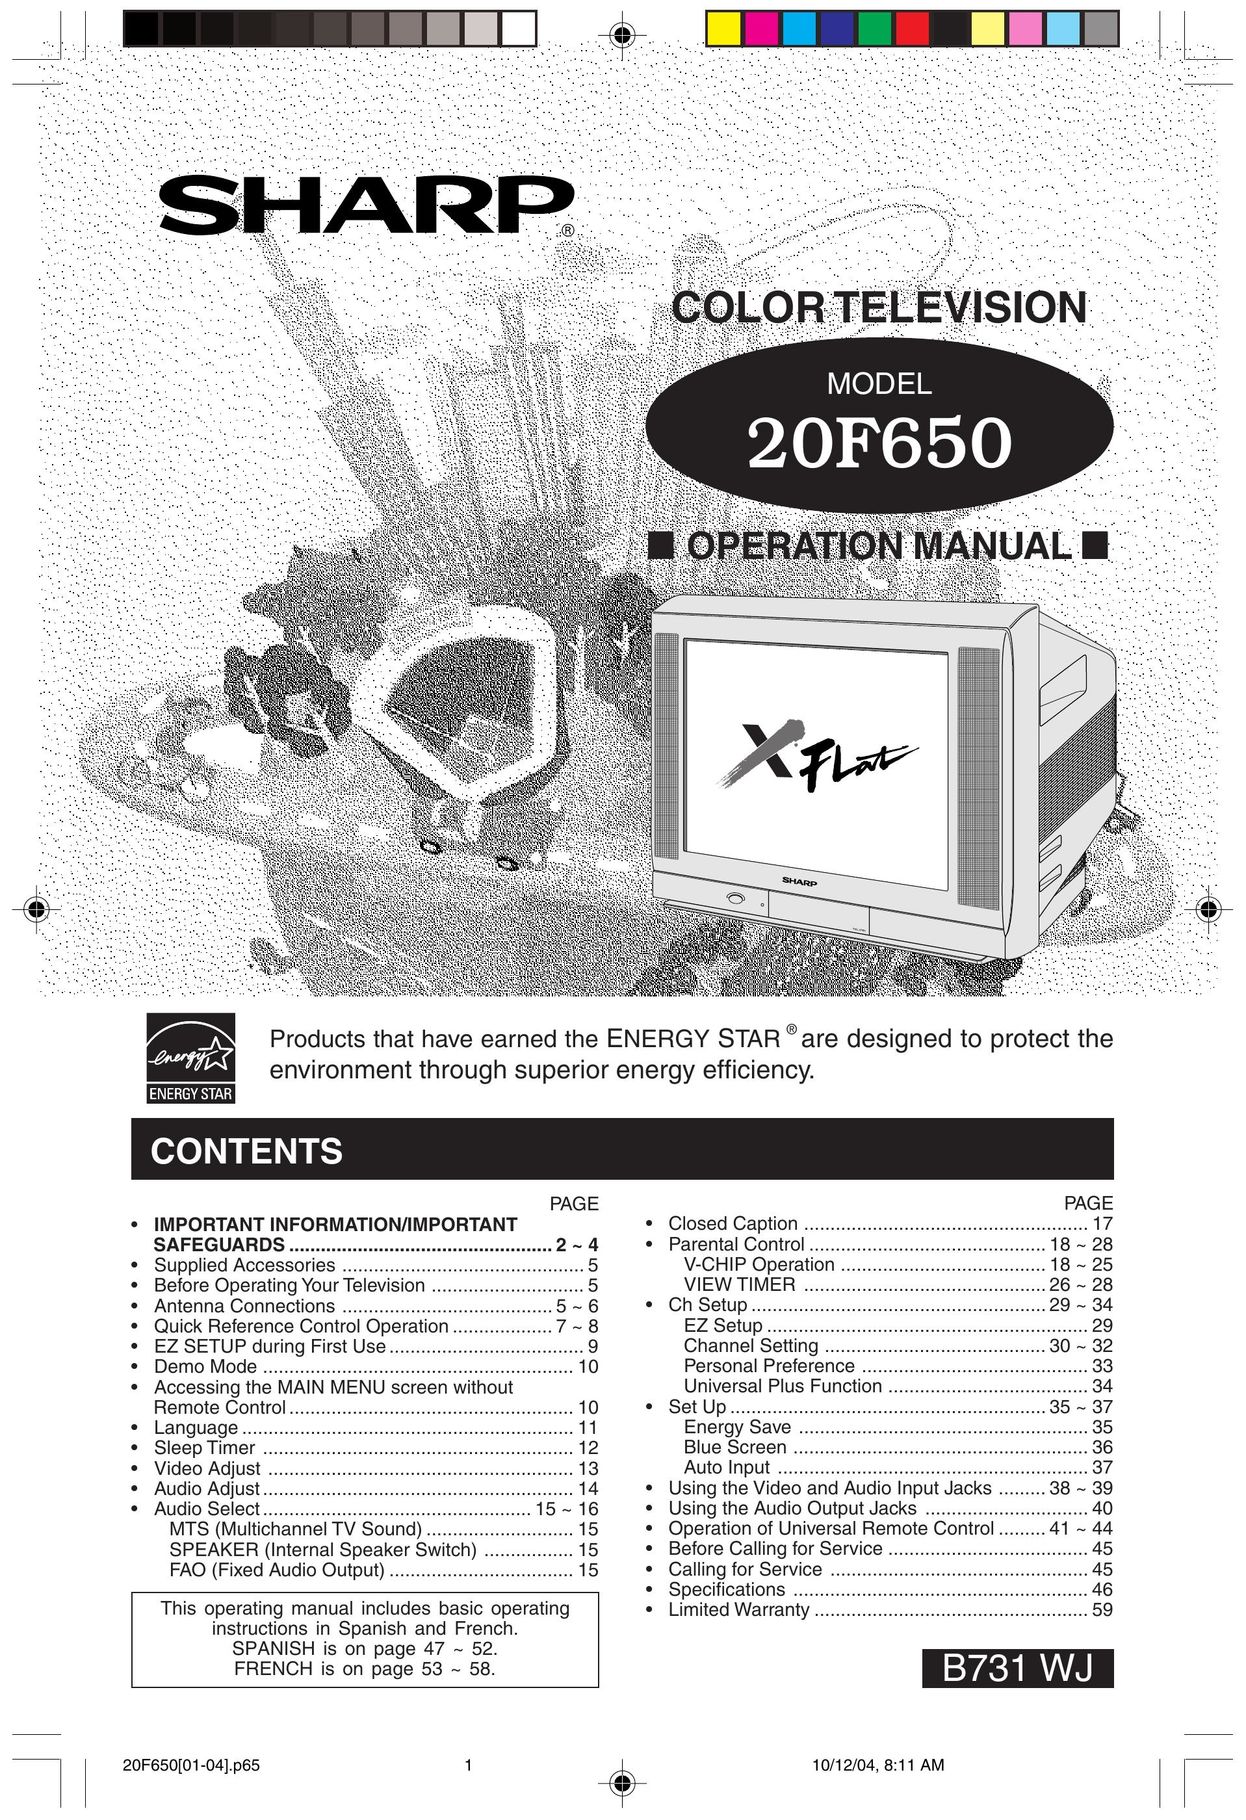 Sharp 20F650 CRT Television User Manual